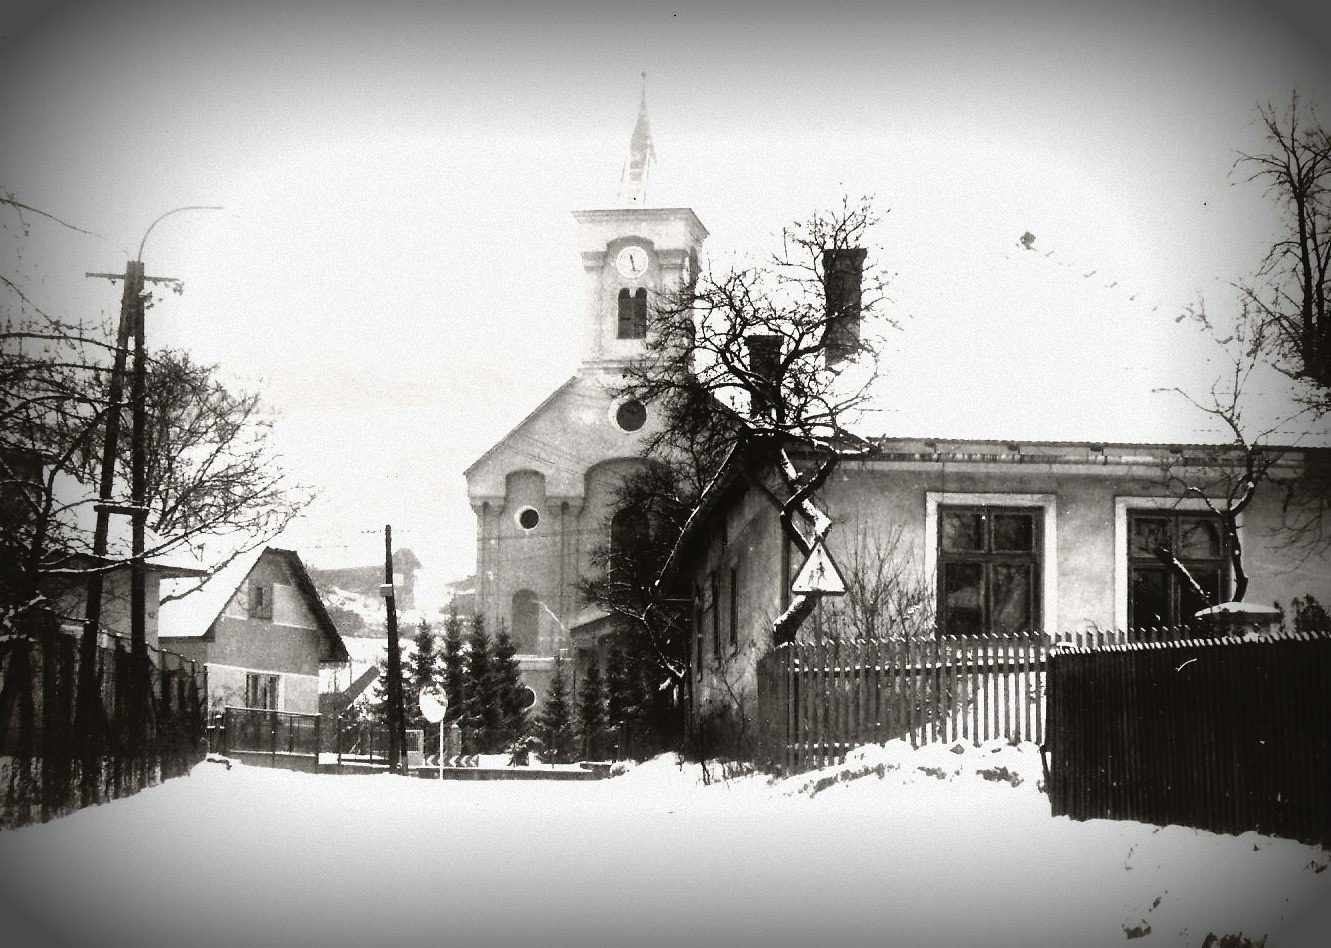 centrum obce Lazy pod Makytou so starou cestou a evanjelickým kostolom v roku 1970 z archívu pána M. Krečmera